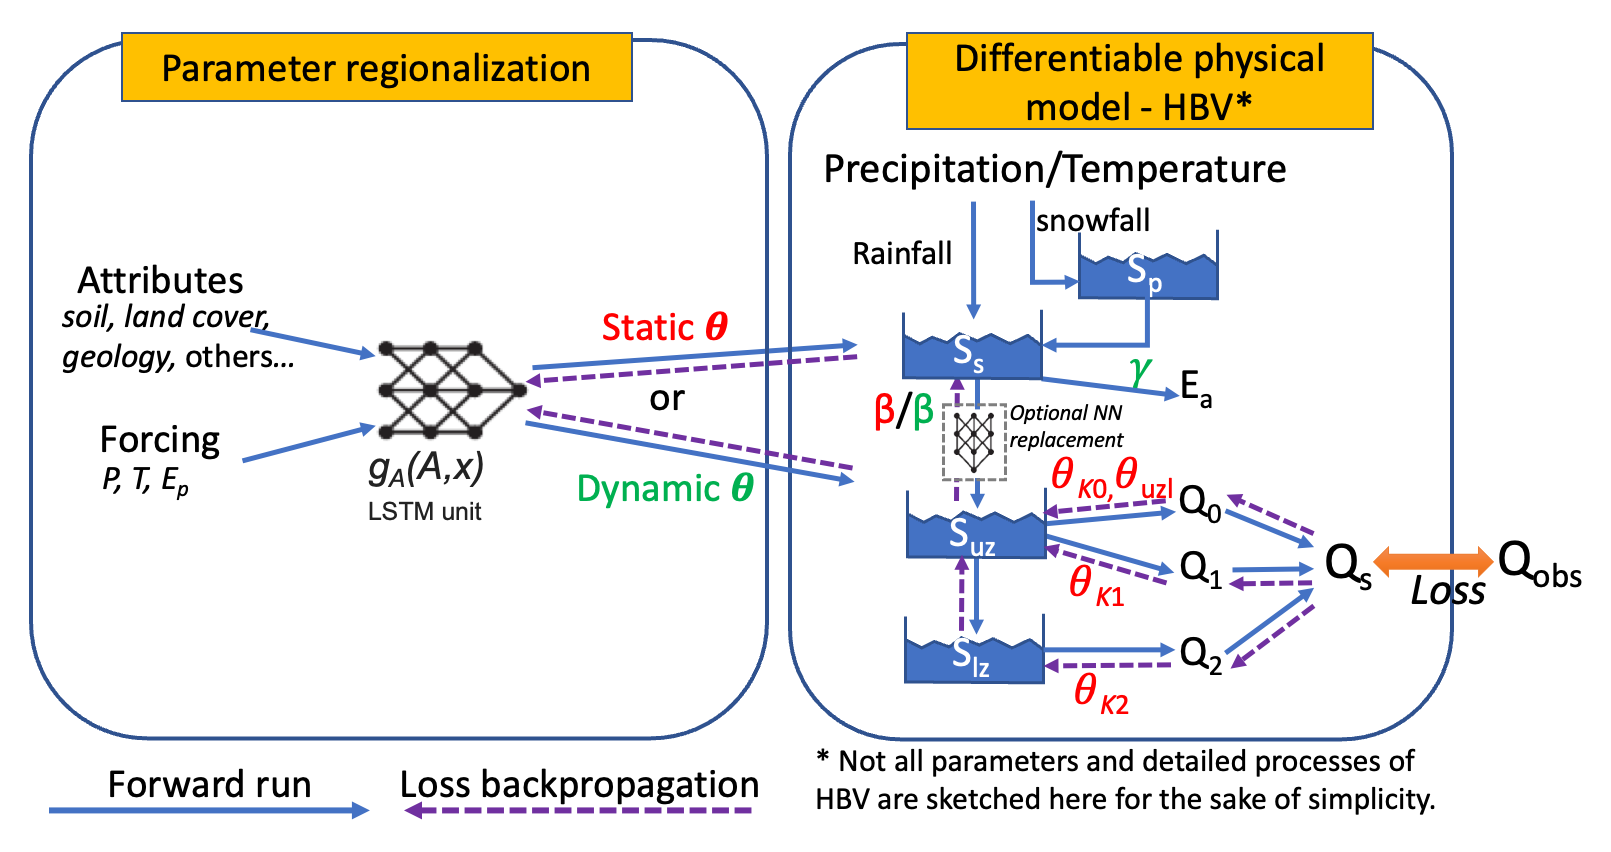 Differentiable hydrologic model framework